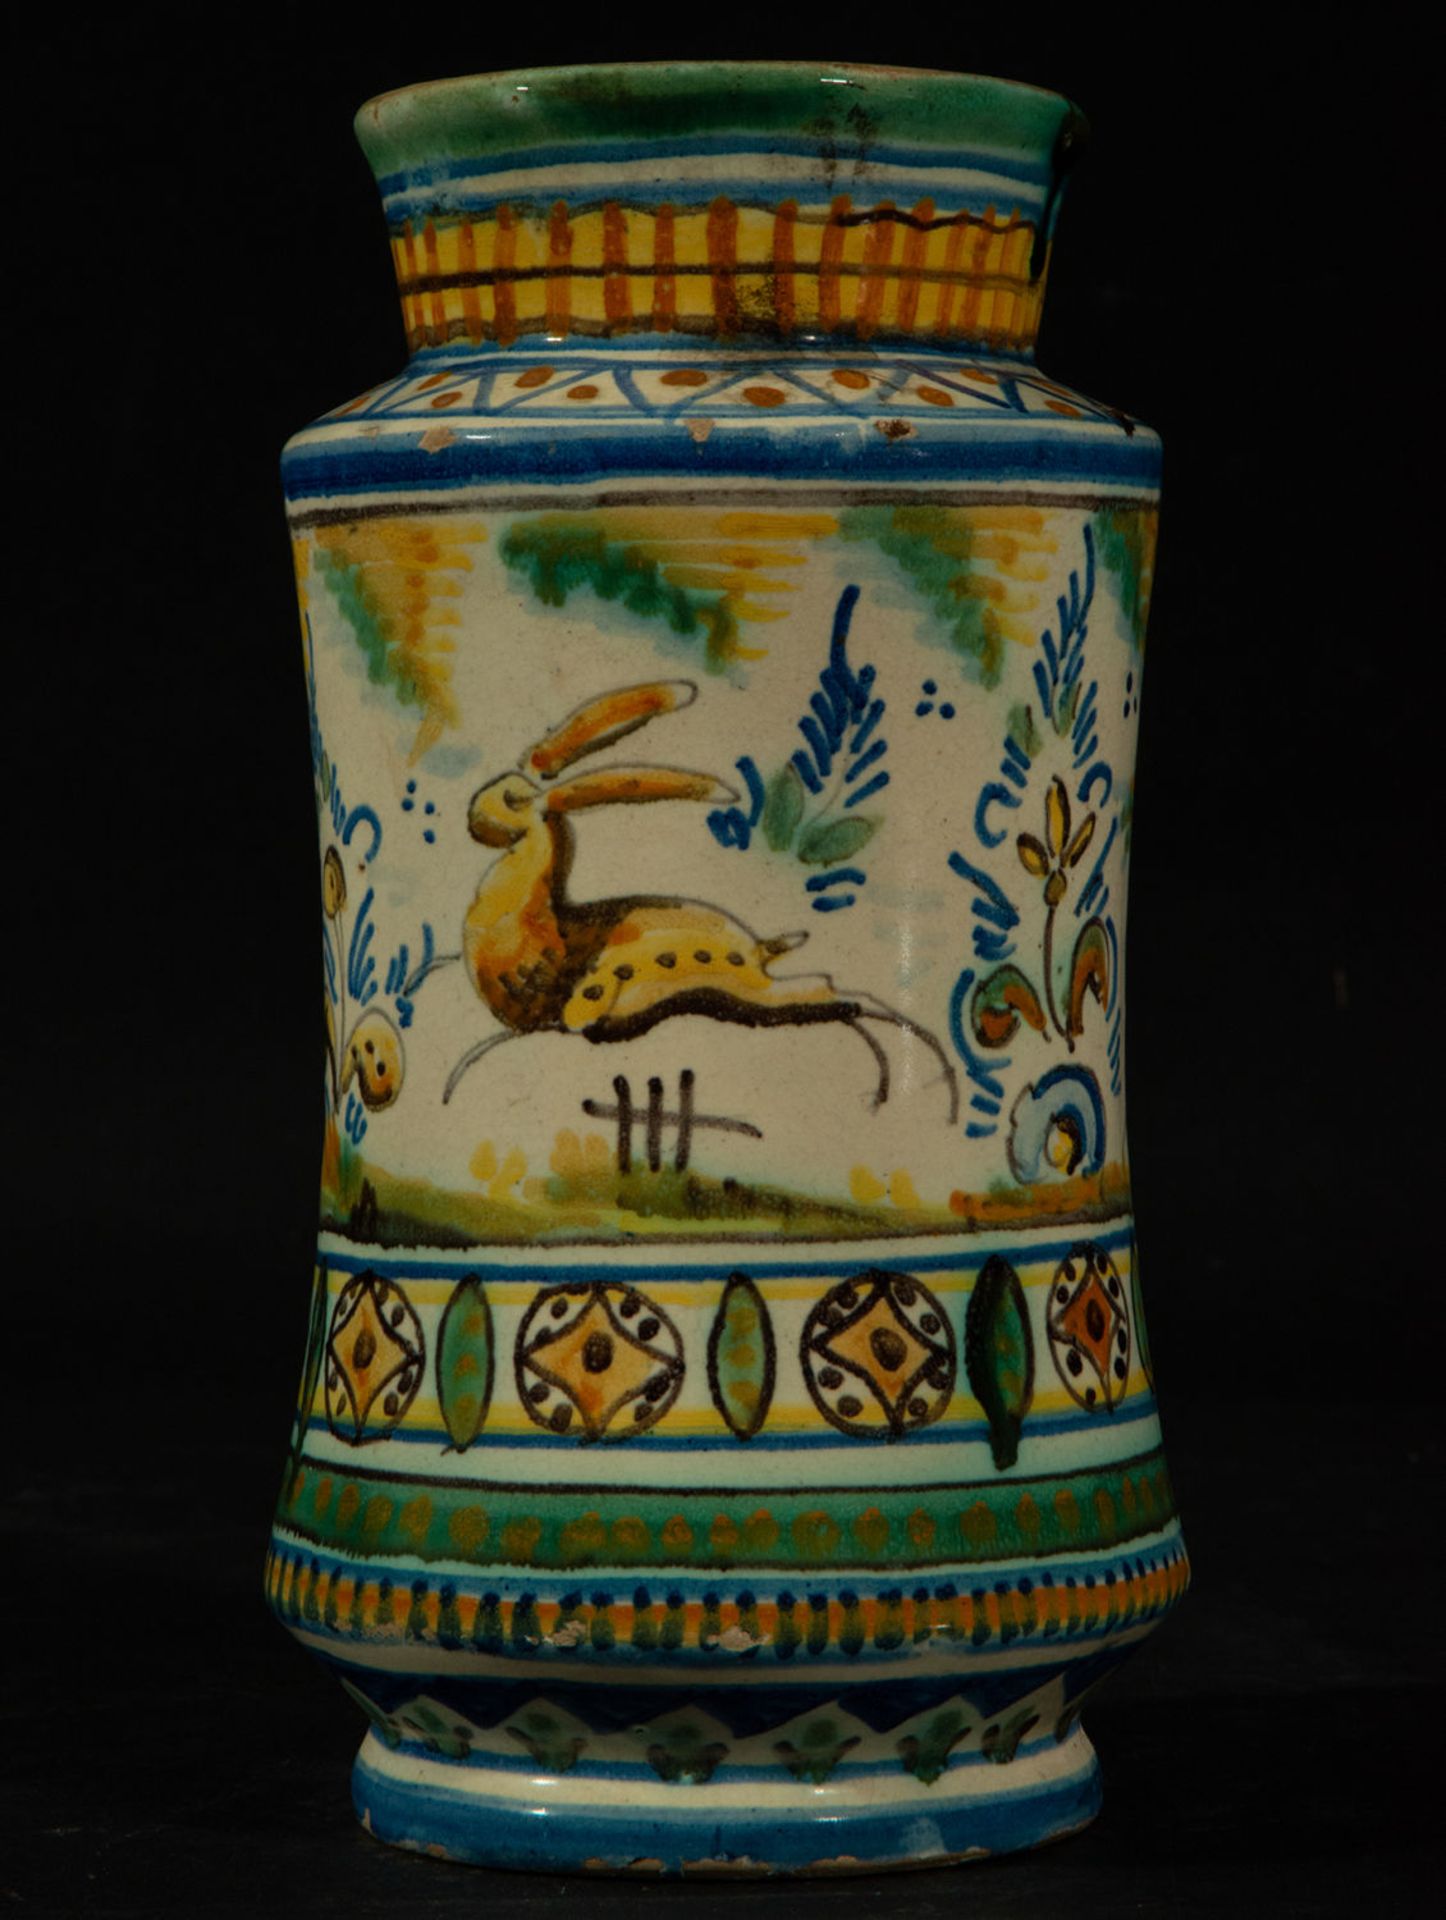 Ceramic Pharmacy Jar from Triana, Hare series, 18th - 19th century - Image 6 of 6